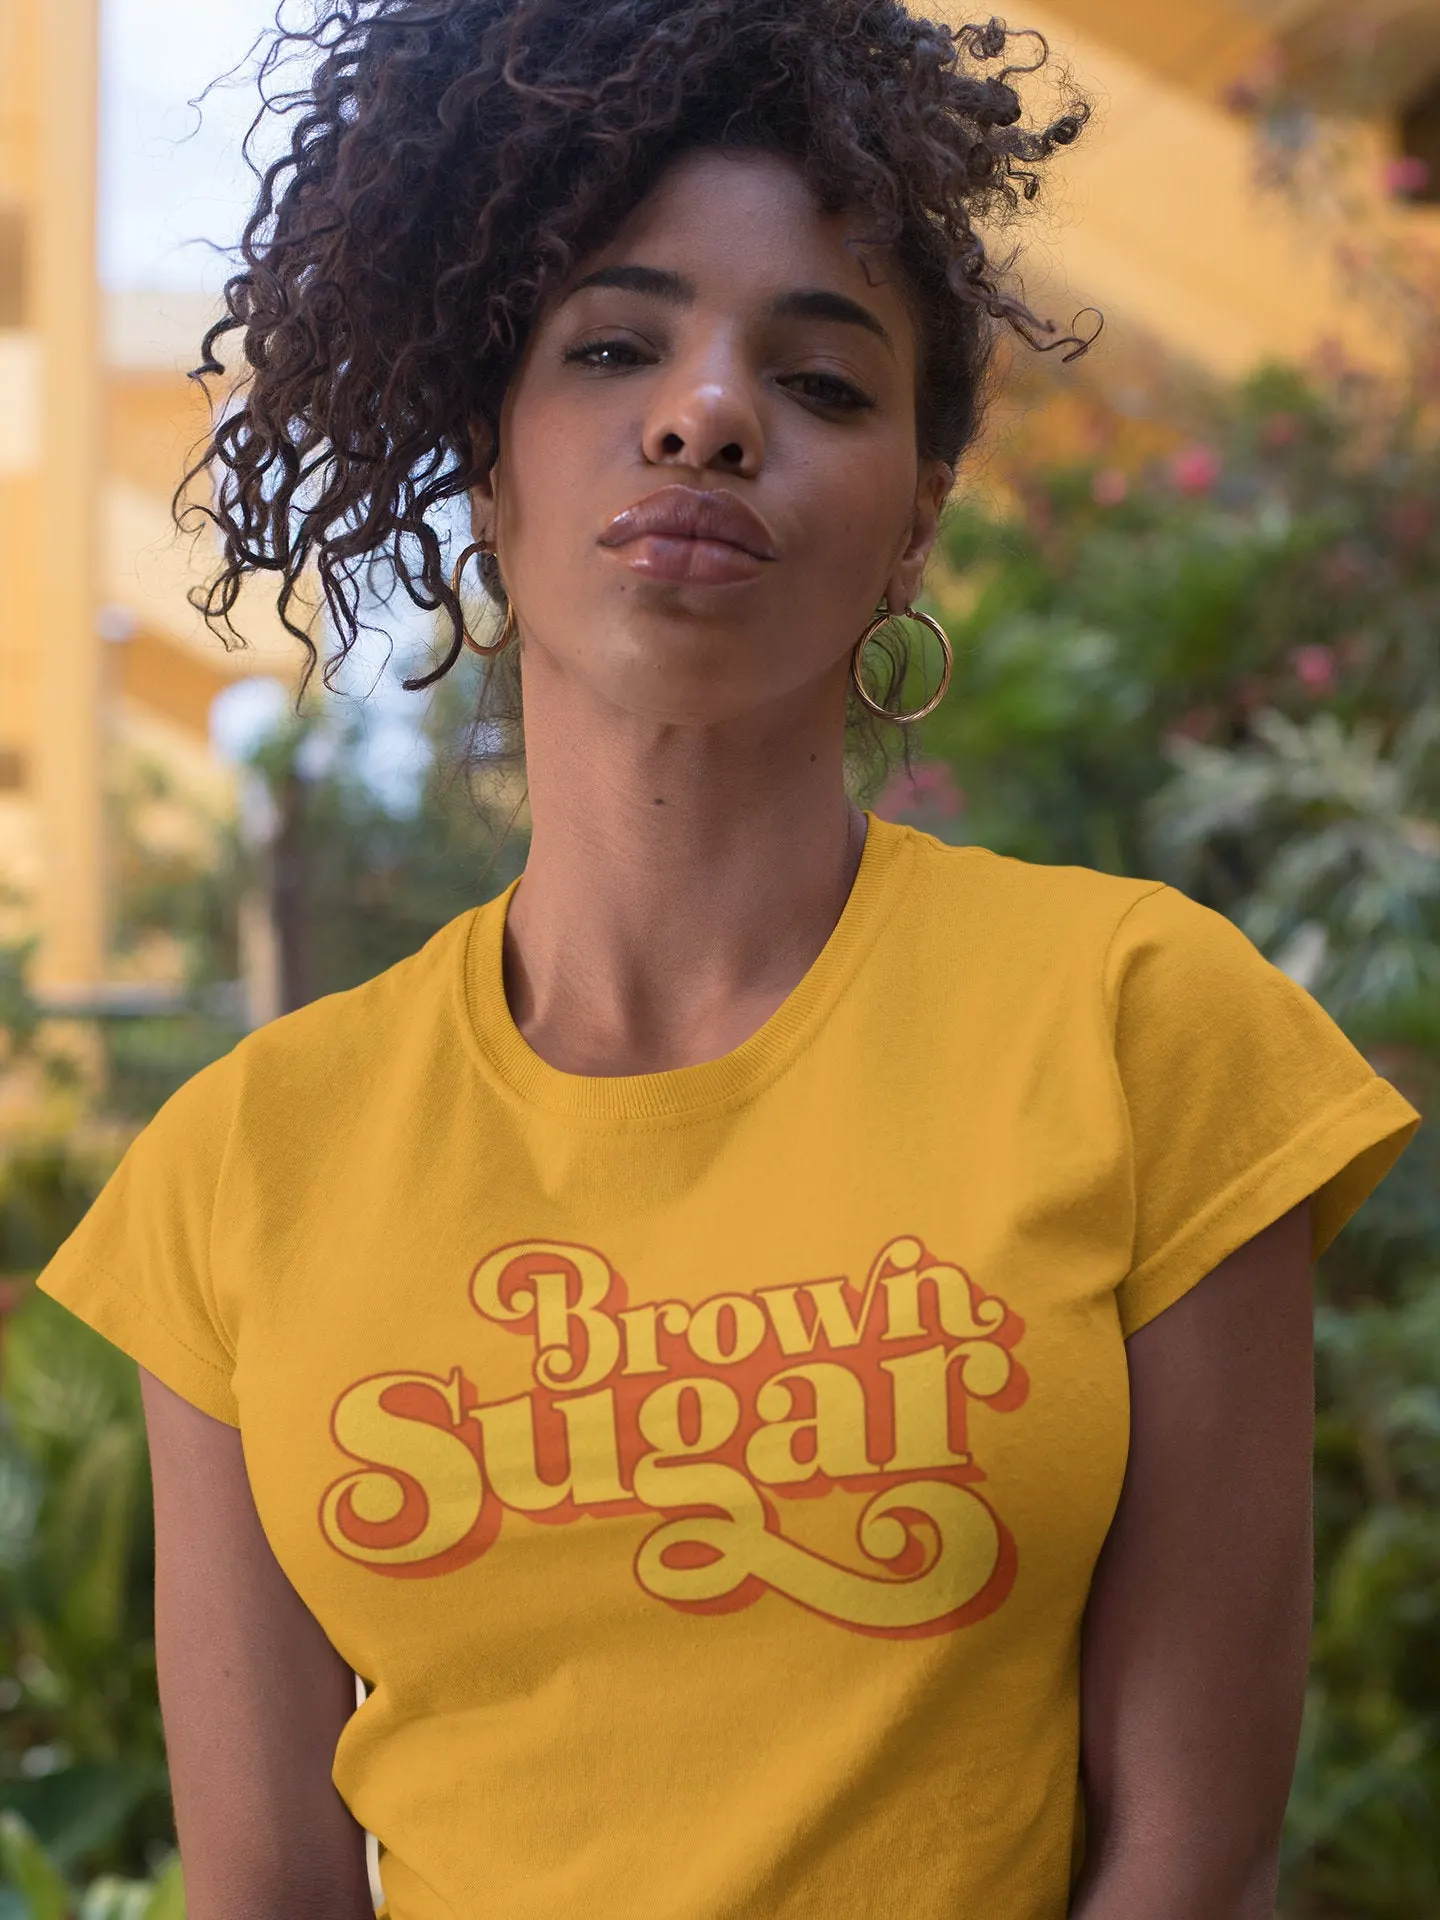 

Women Brown Sugar T-Shirt Black Pride Shirt Melanin Black Queen Shirt Afro Girl BLM Tees Vintage Graphic Tees Casual Tops